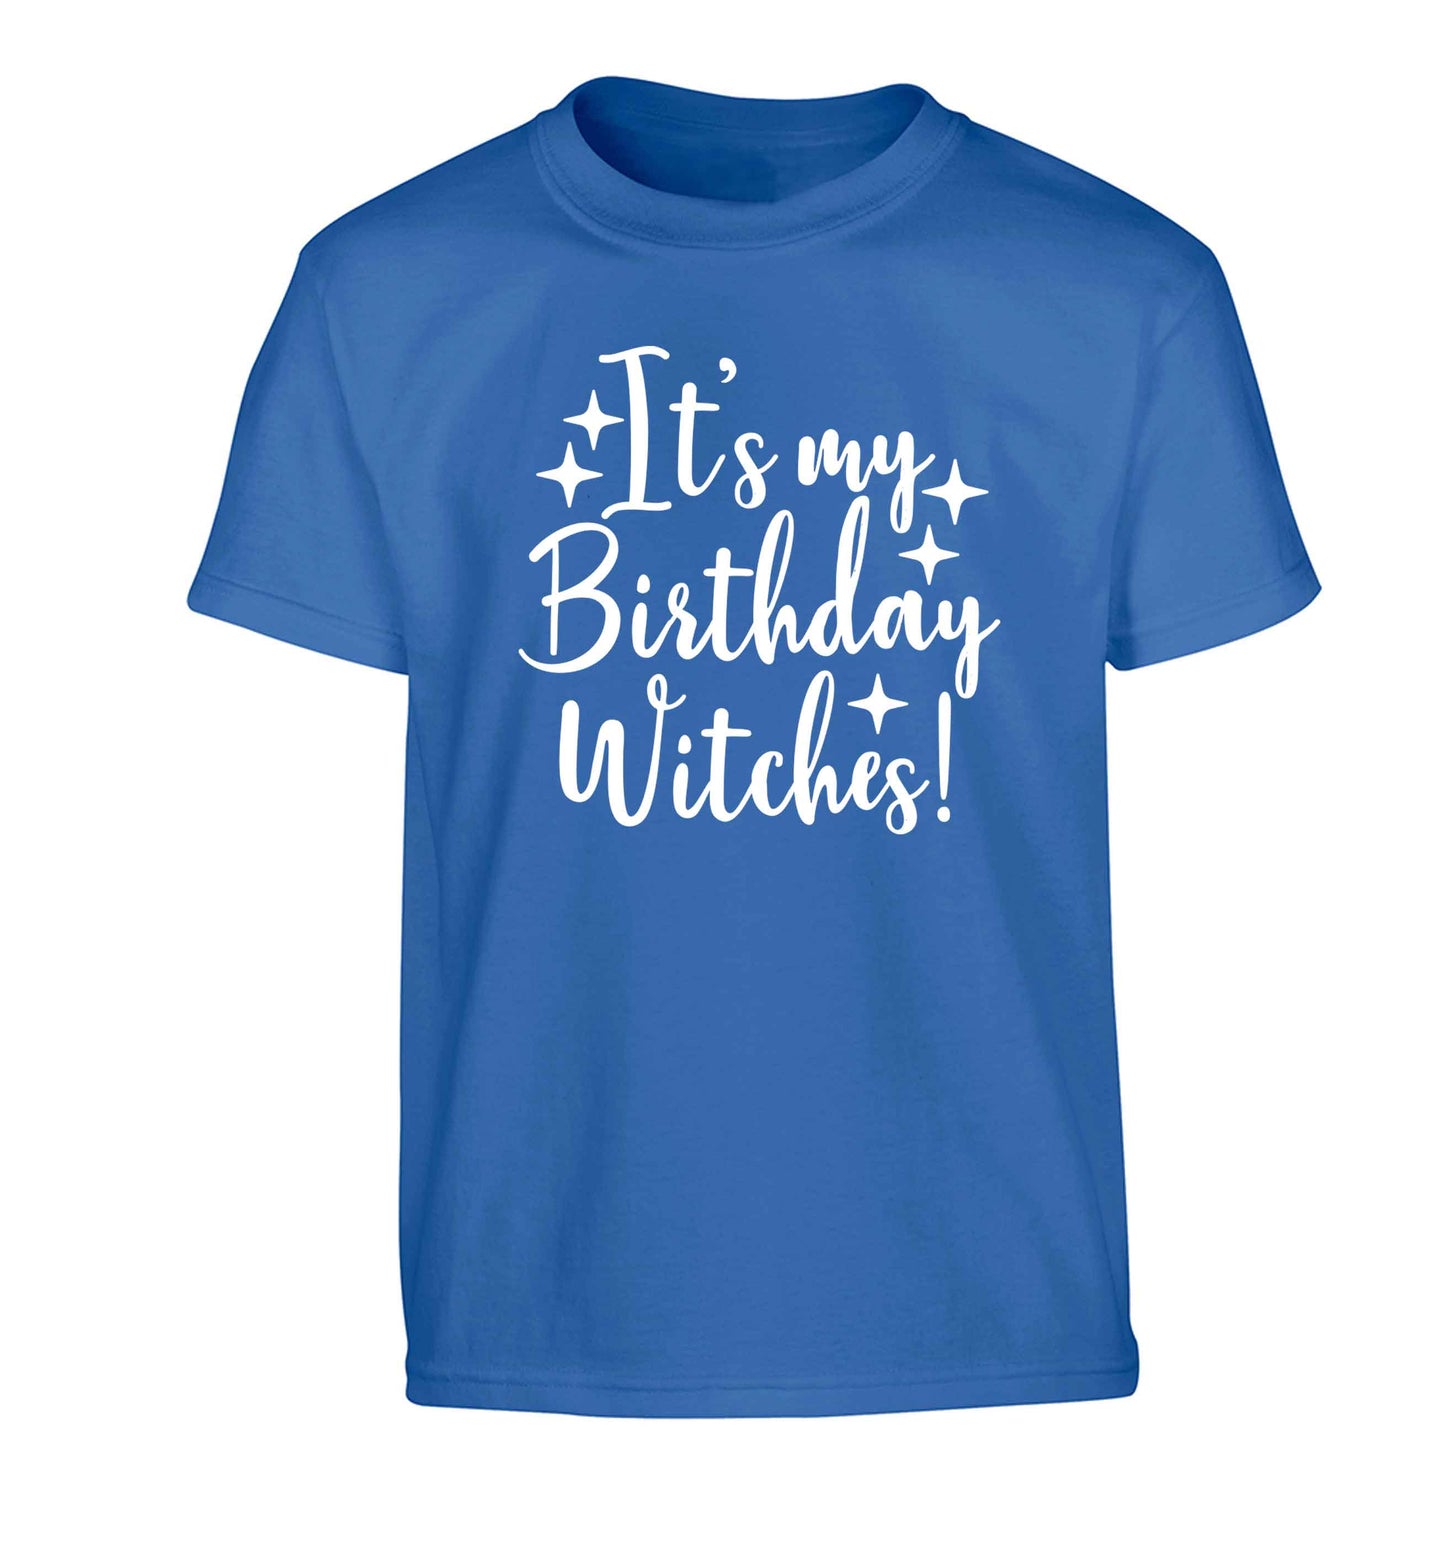 It's my birthday witches!Children's blue Tshirt 12-13 Years